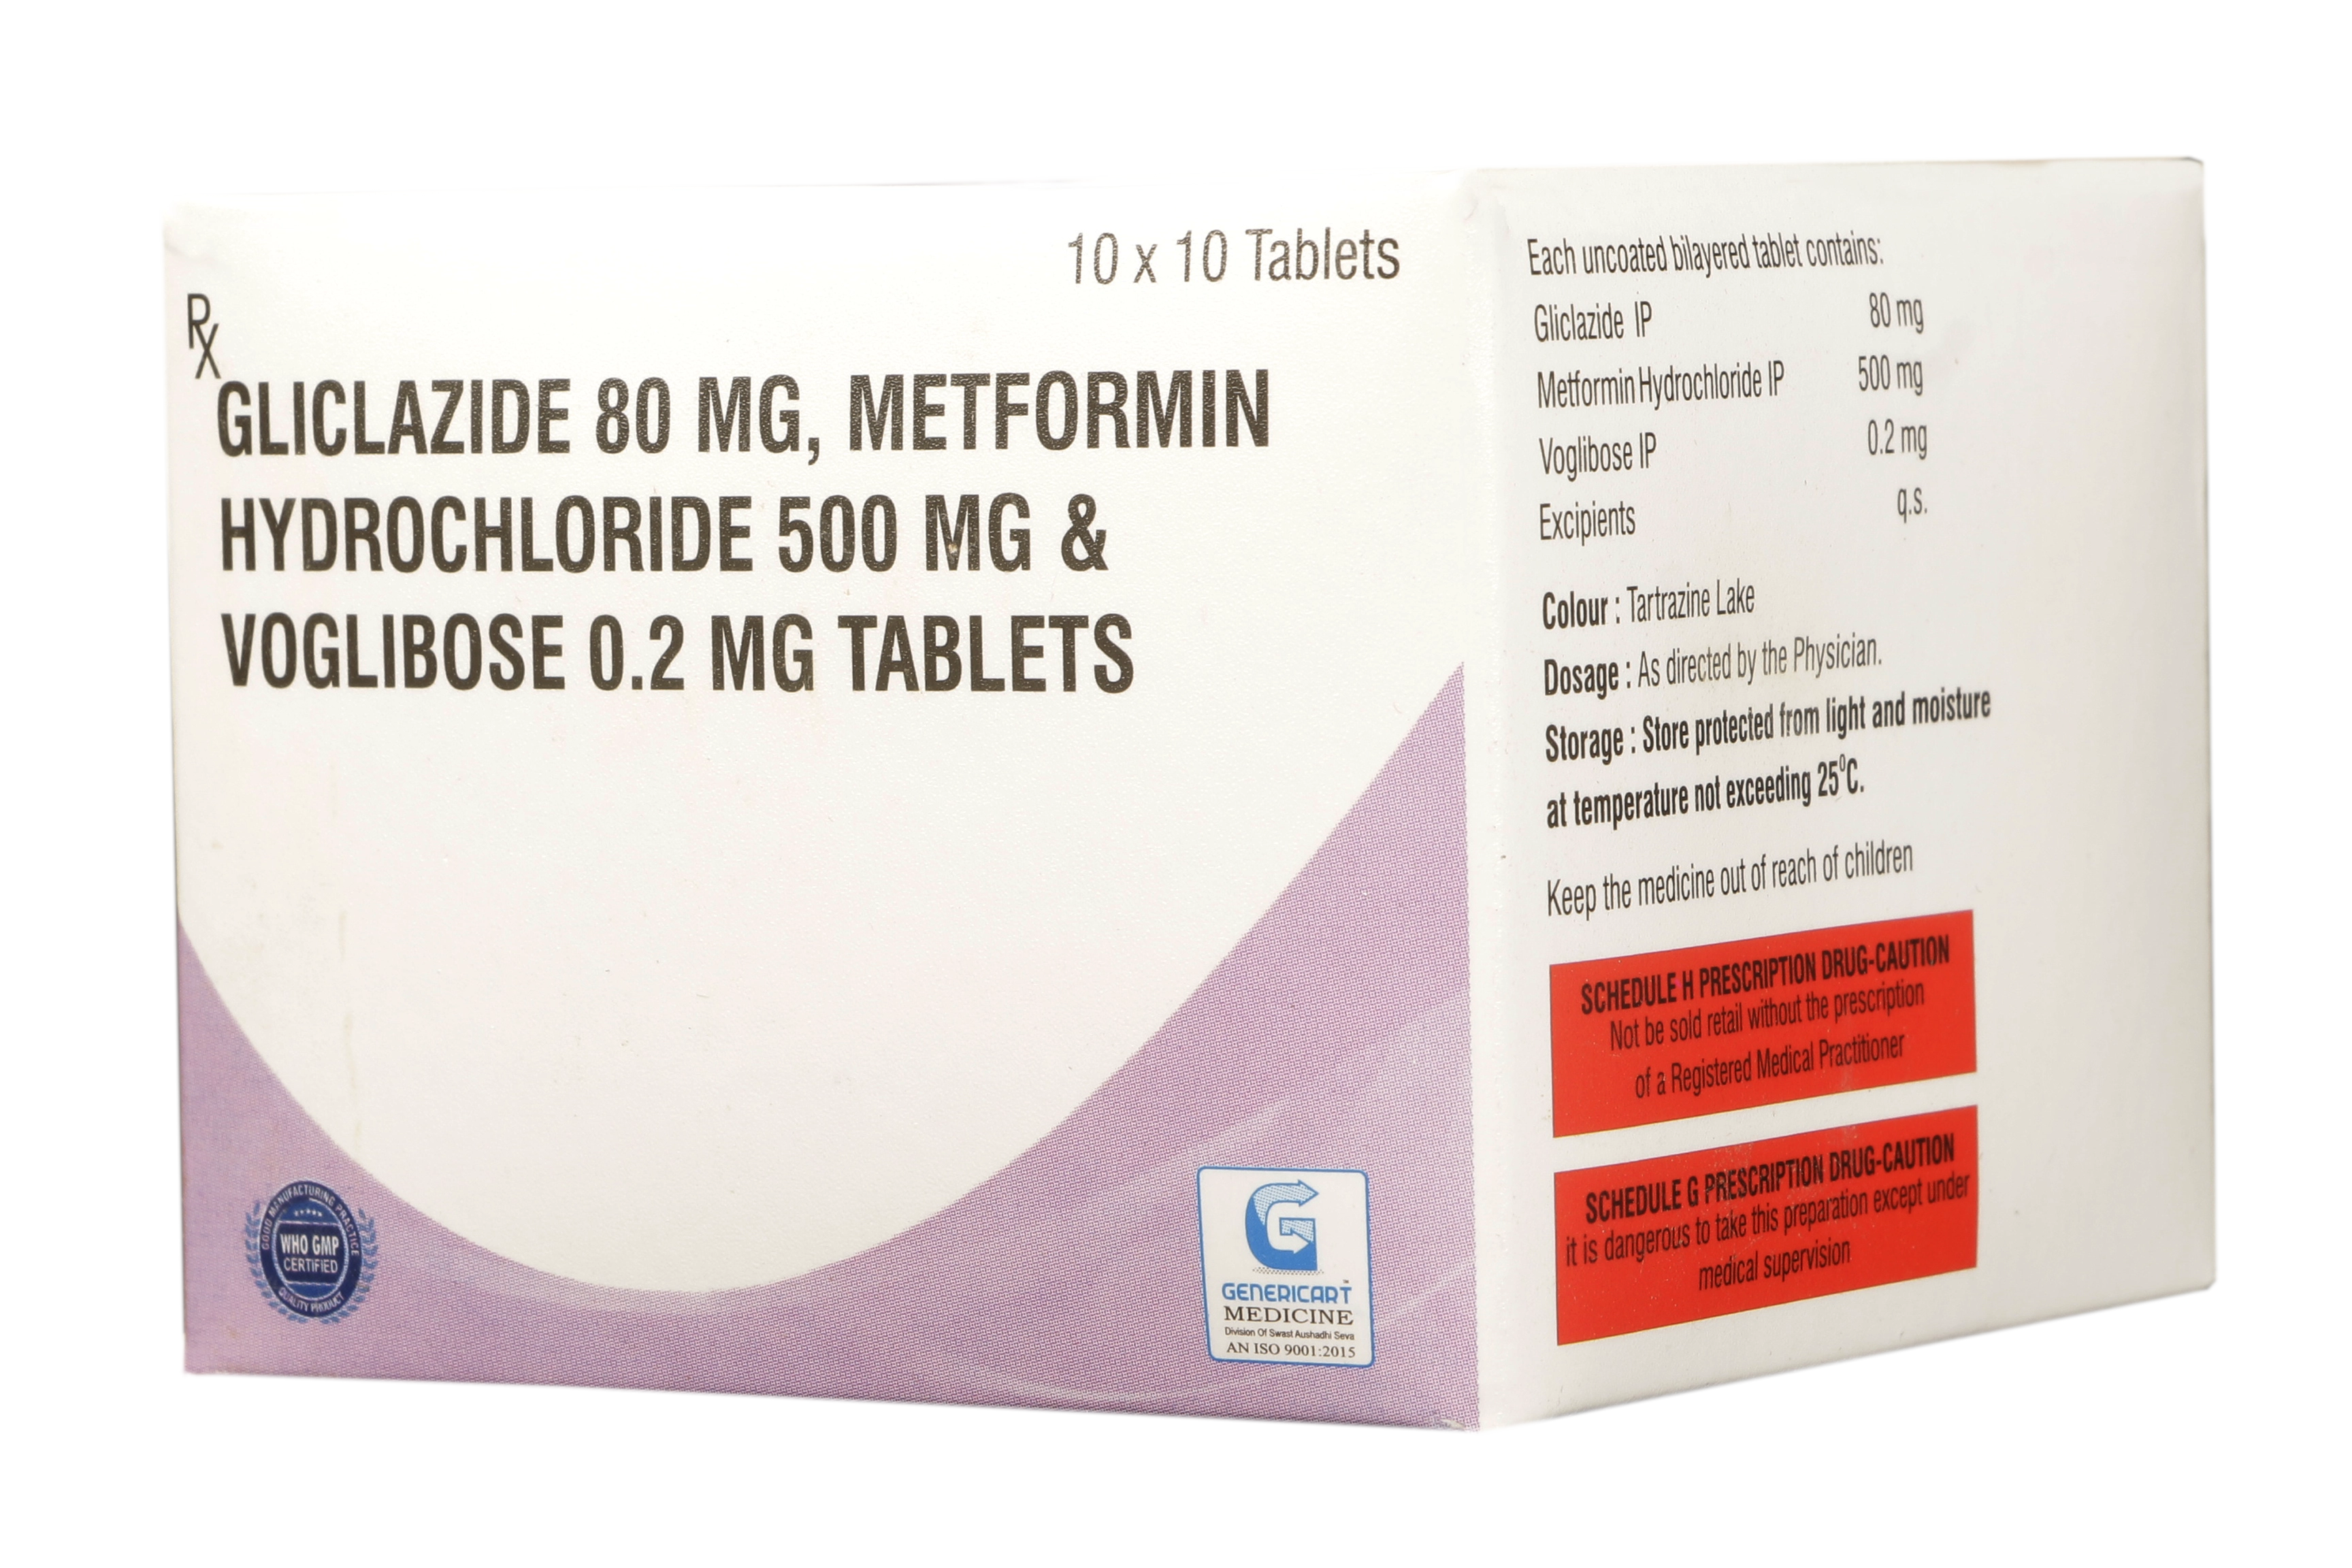 GLICLAZIDE 80 MG + METFORMIN HYDROCLORIDE 500 MG + VOGLIBOSE 0.2 MG